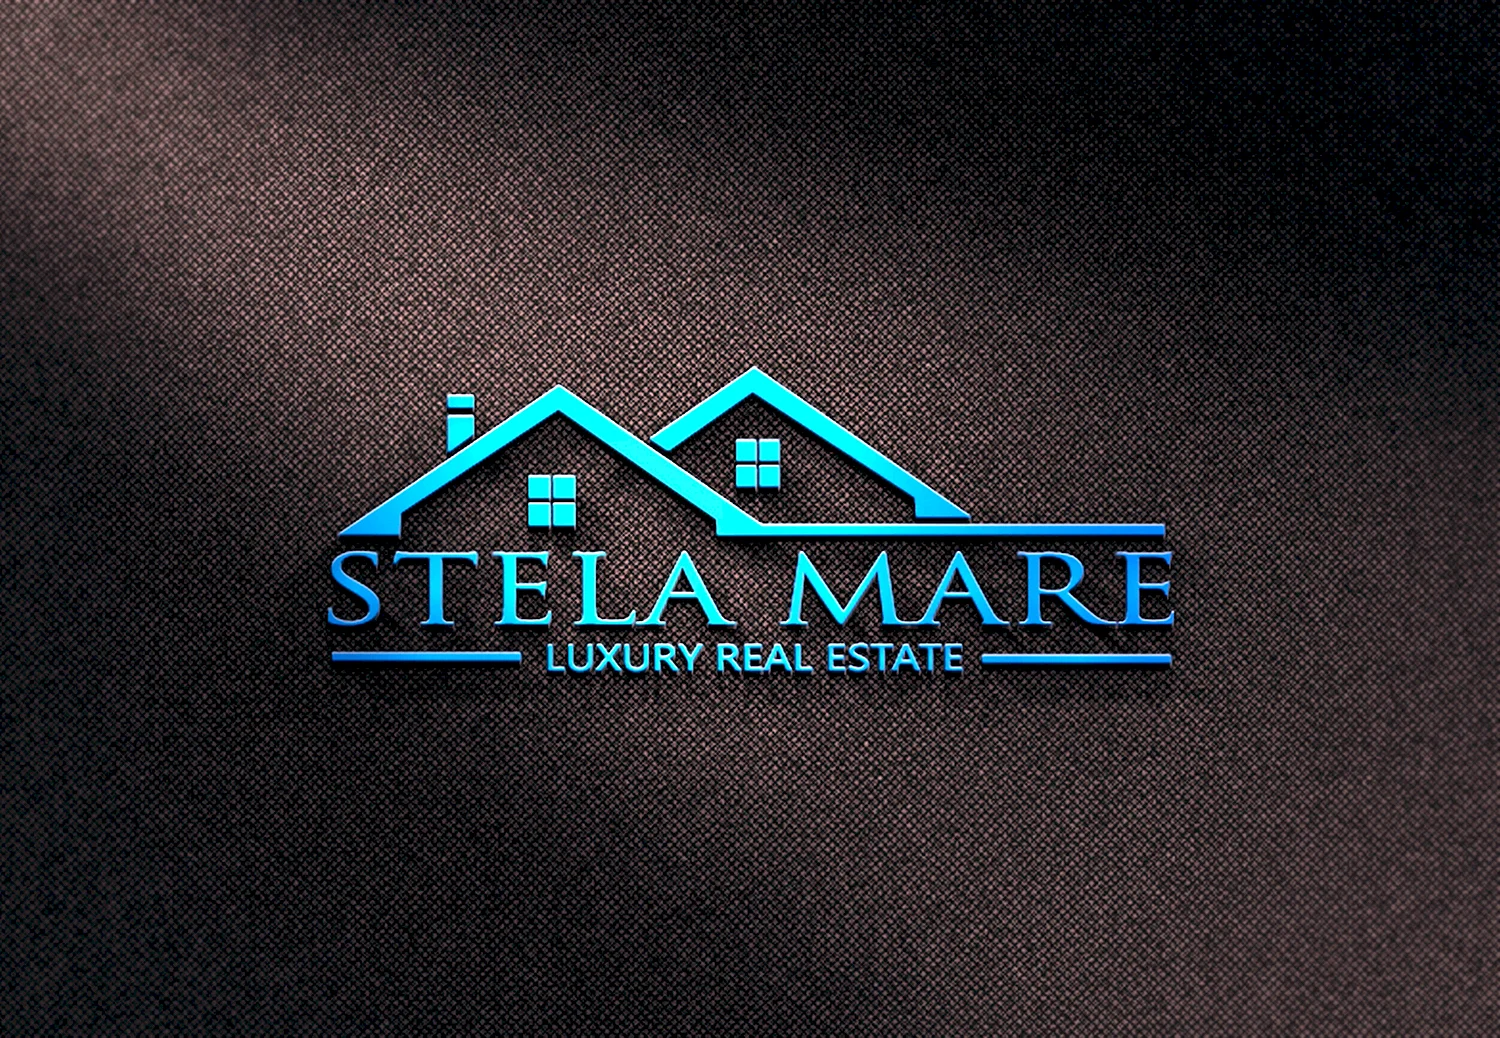 Real Estate логотип